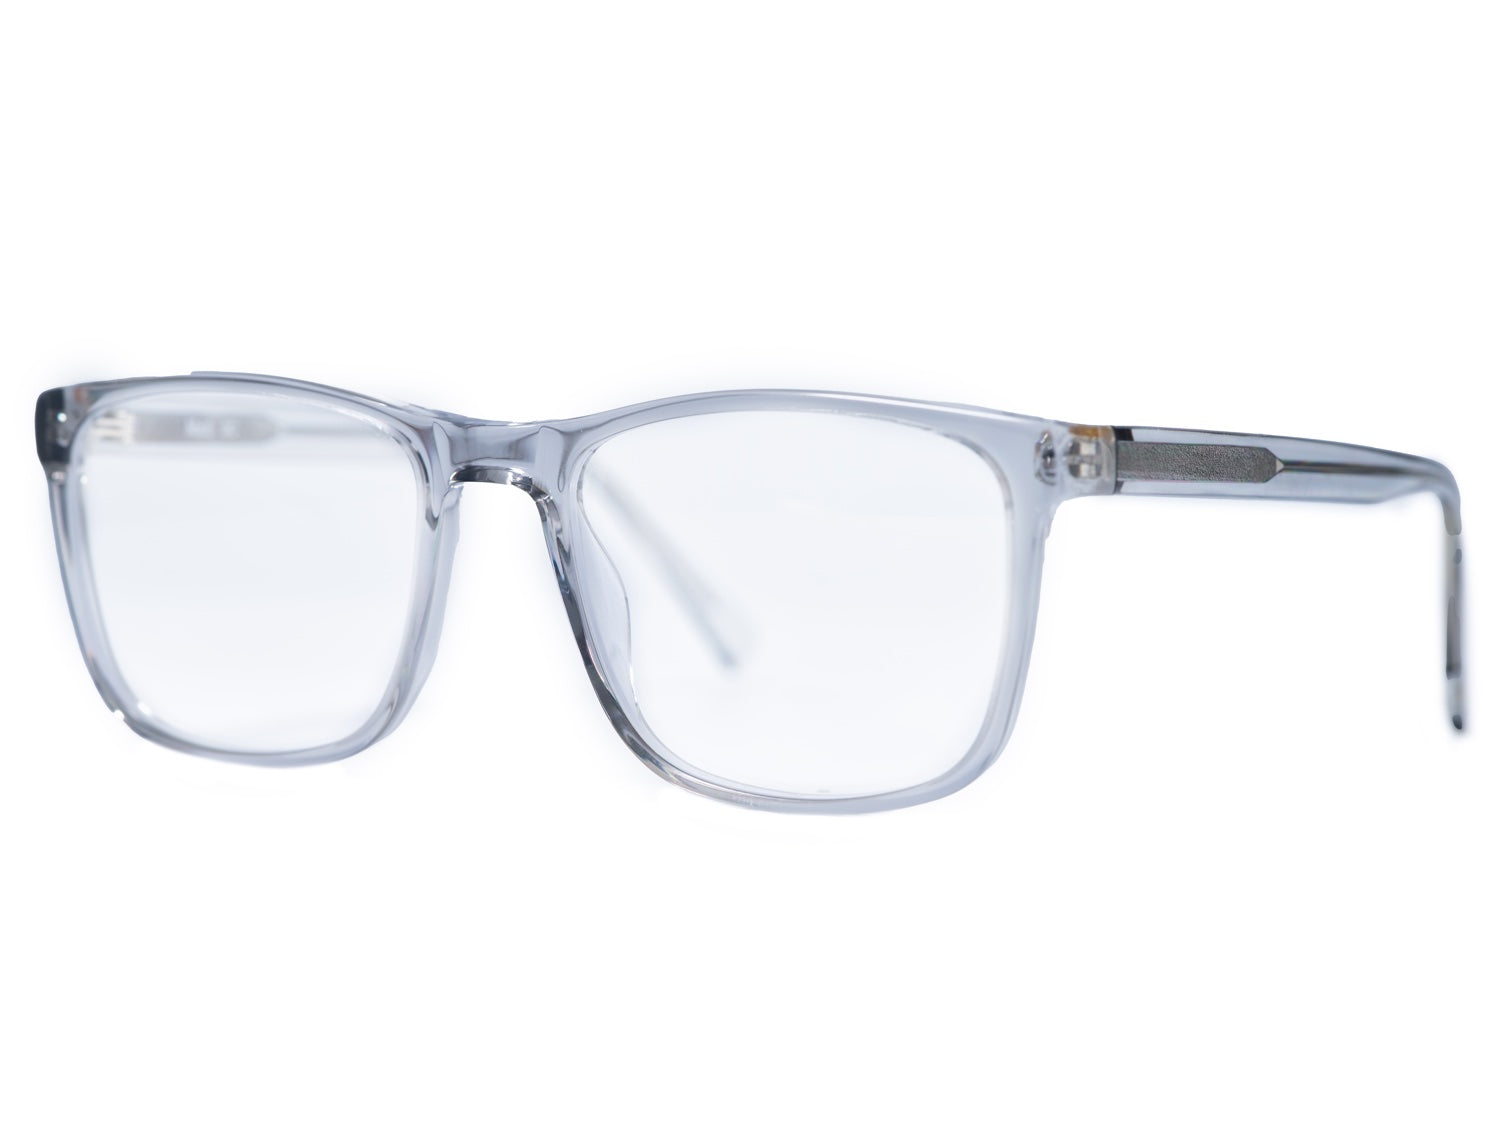 YMC X Bridges & Brows Matti Clear Glasses